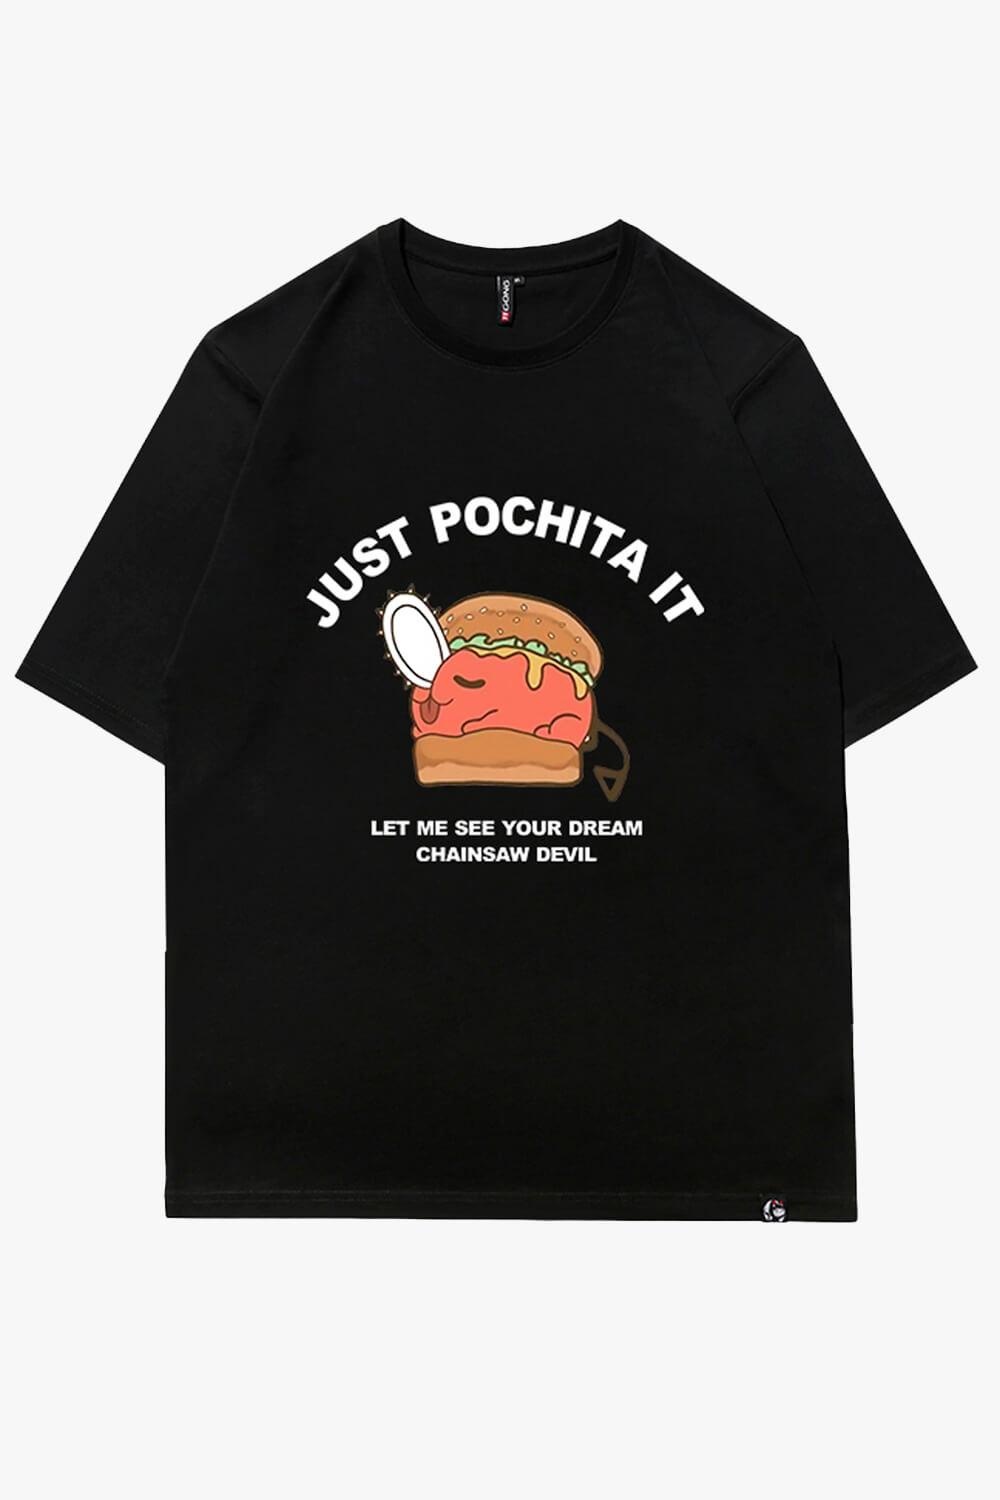 Just Pochita It Chainsaw Man T-Shirt - Aesthetic Clothes Shop